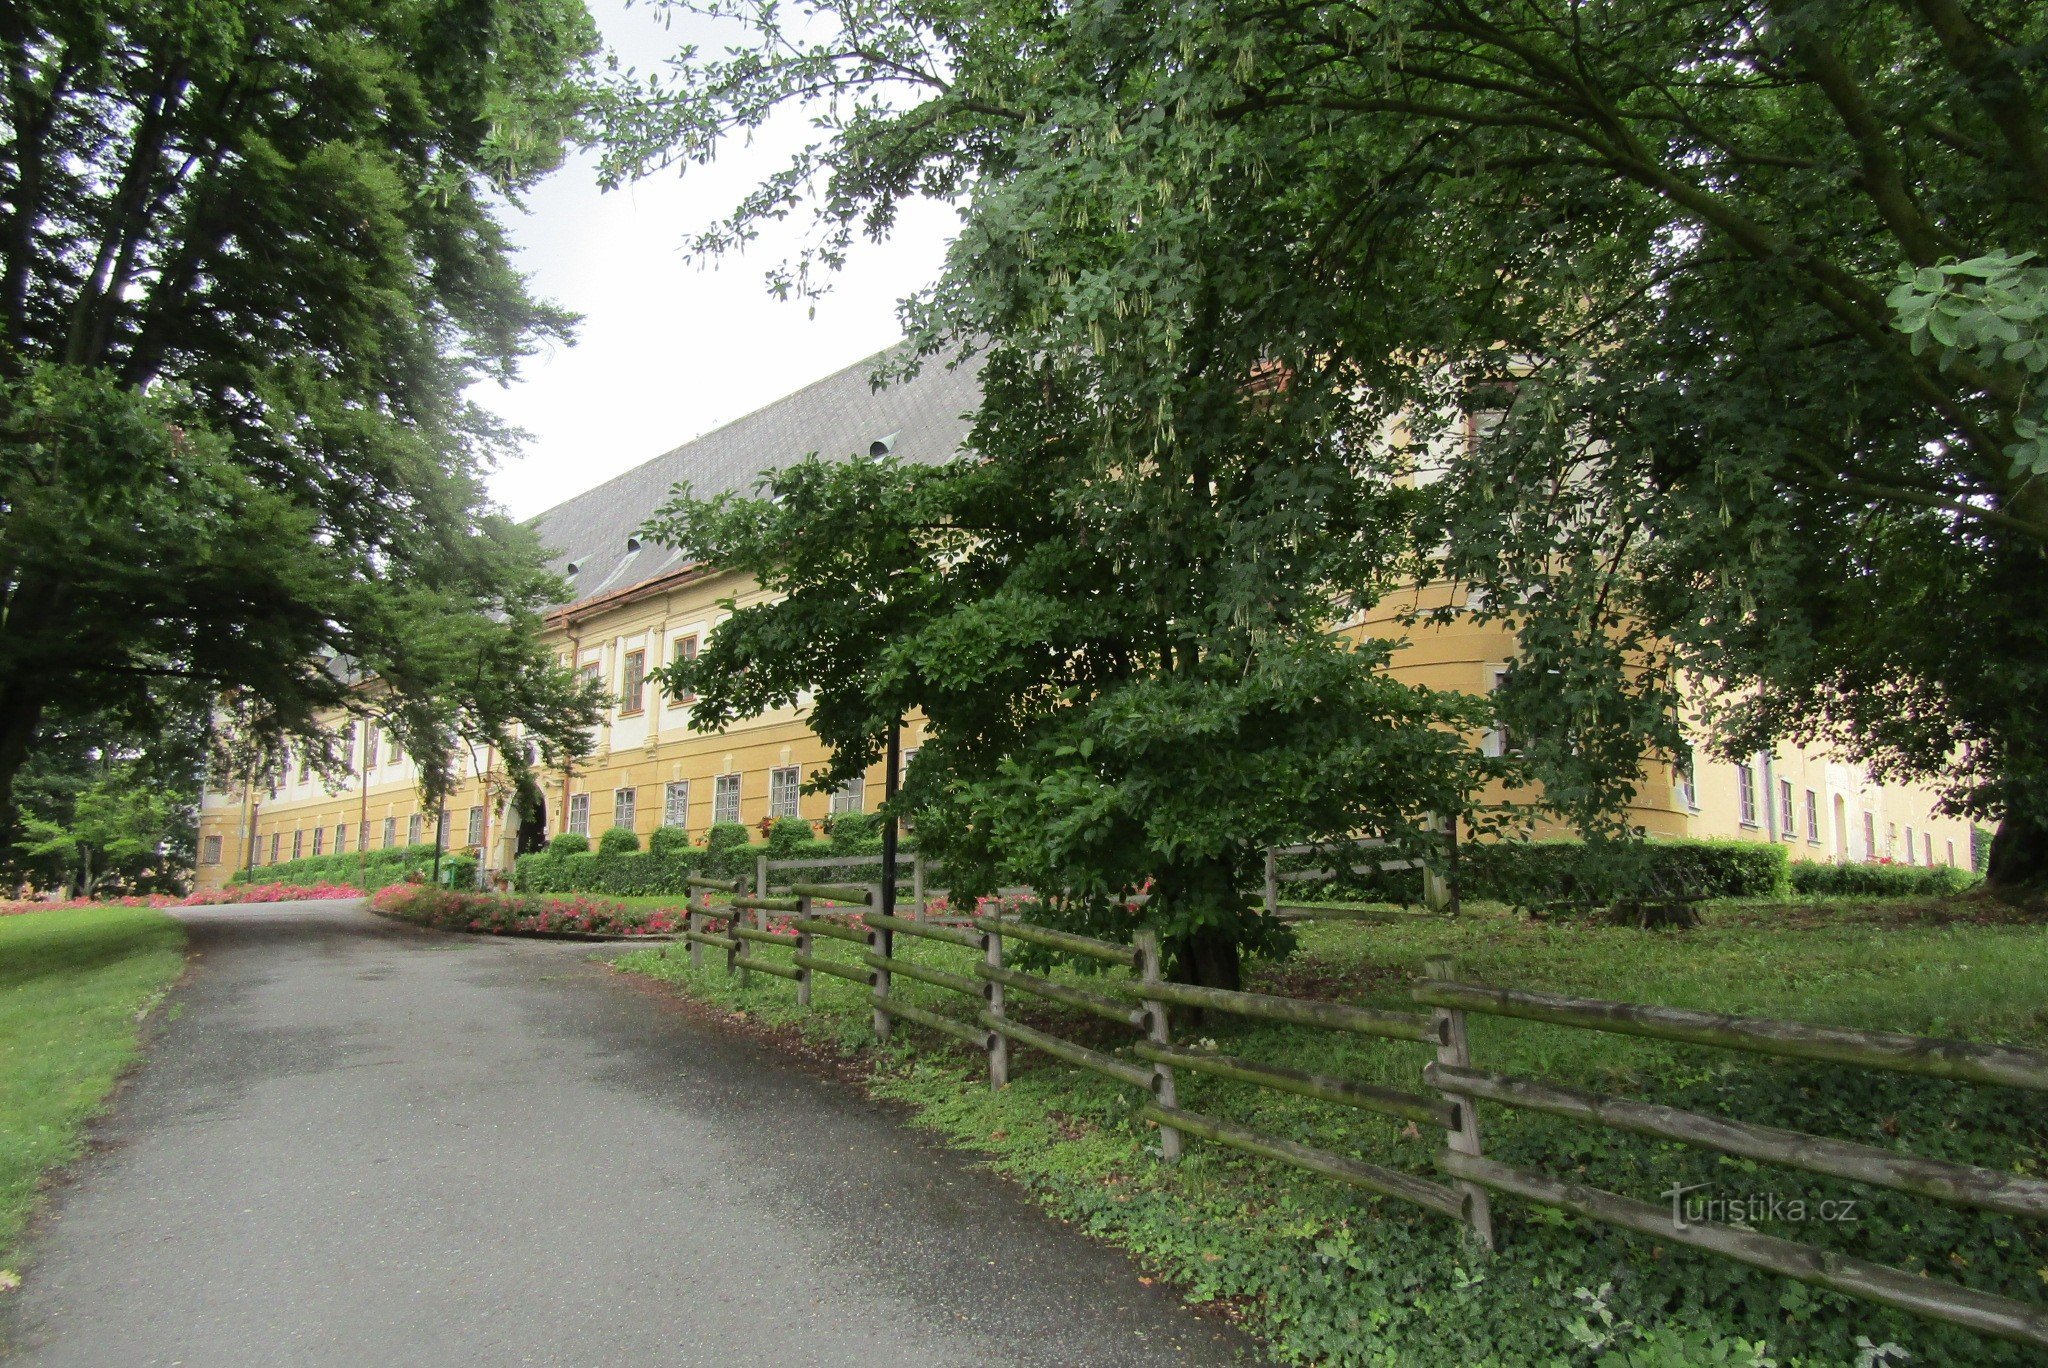 Château de Bludov